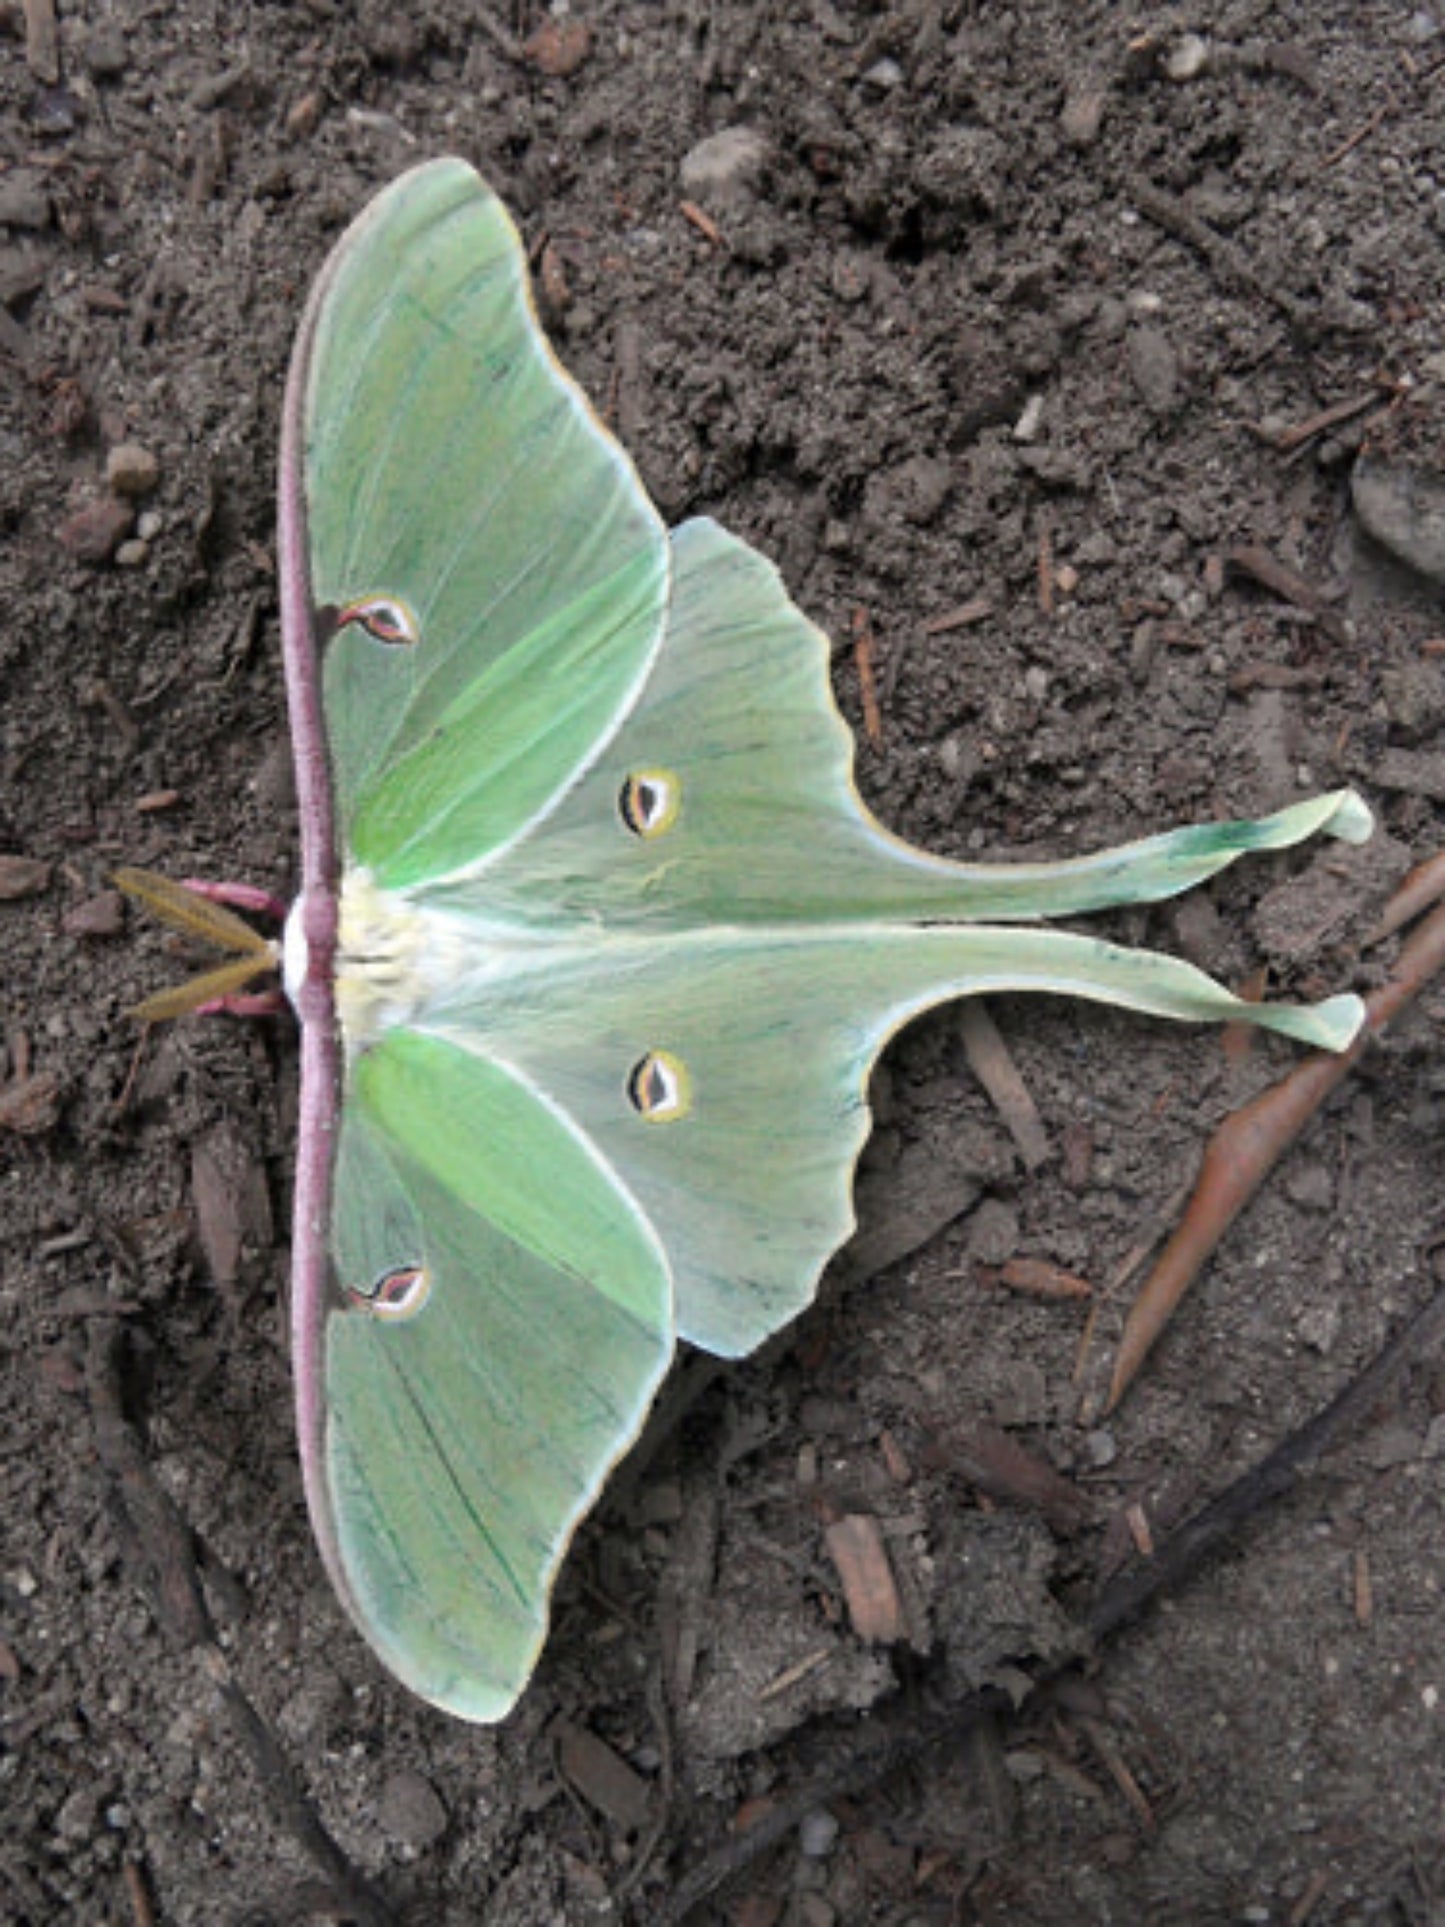 luna moth relaxing on the soil